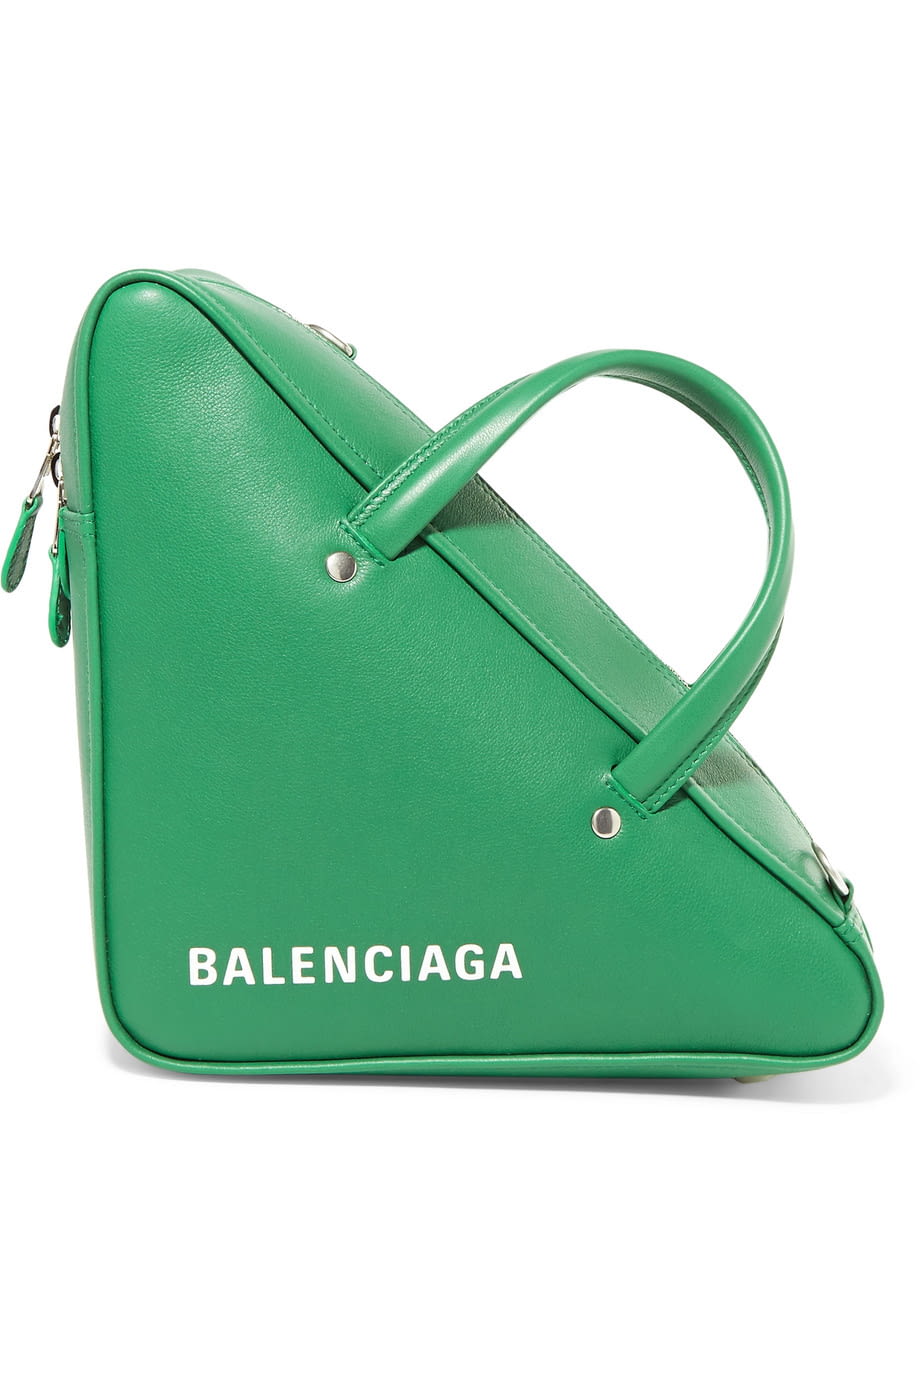 NetaPorter and Mr Porter launch exclusive Balenciaga collection